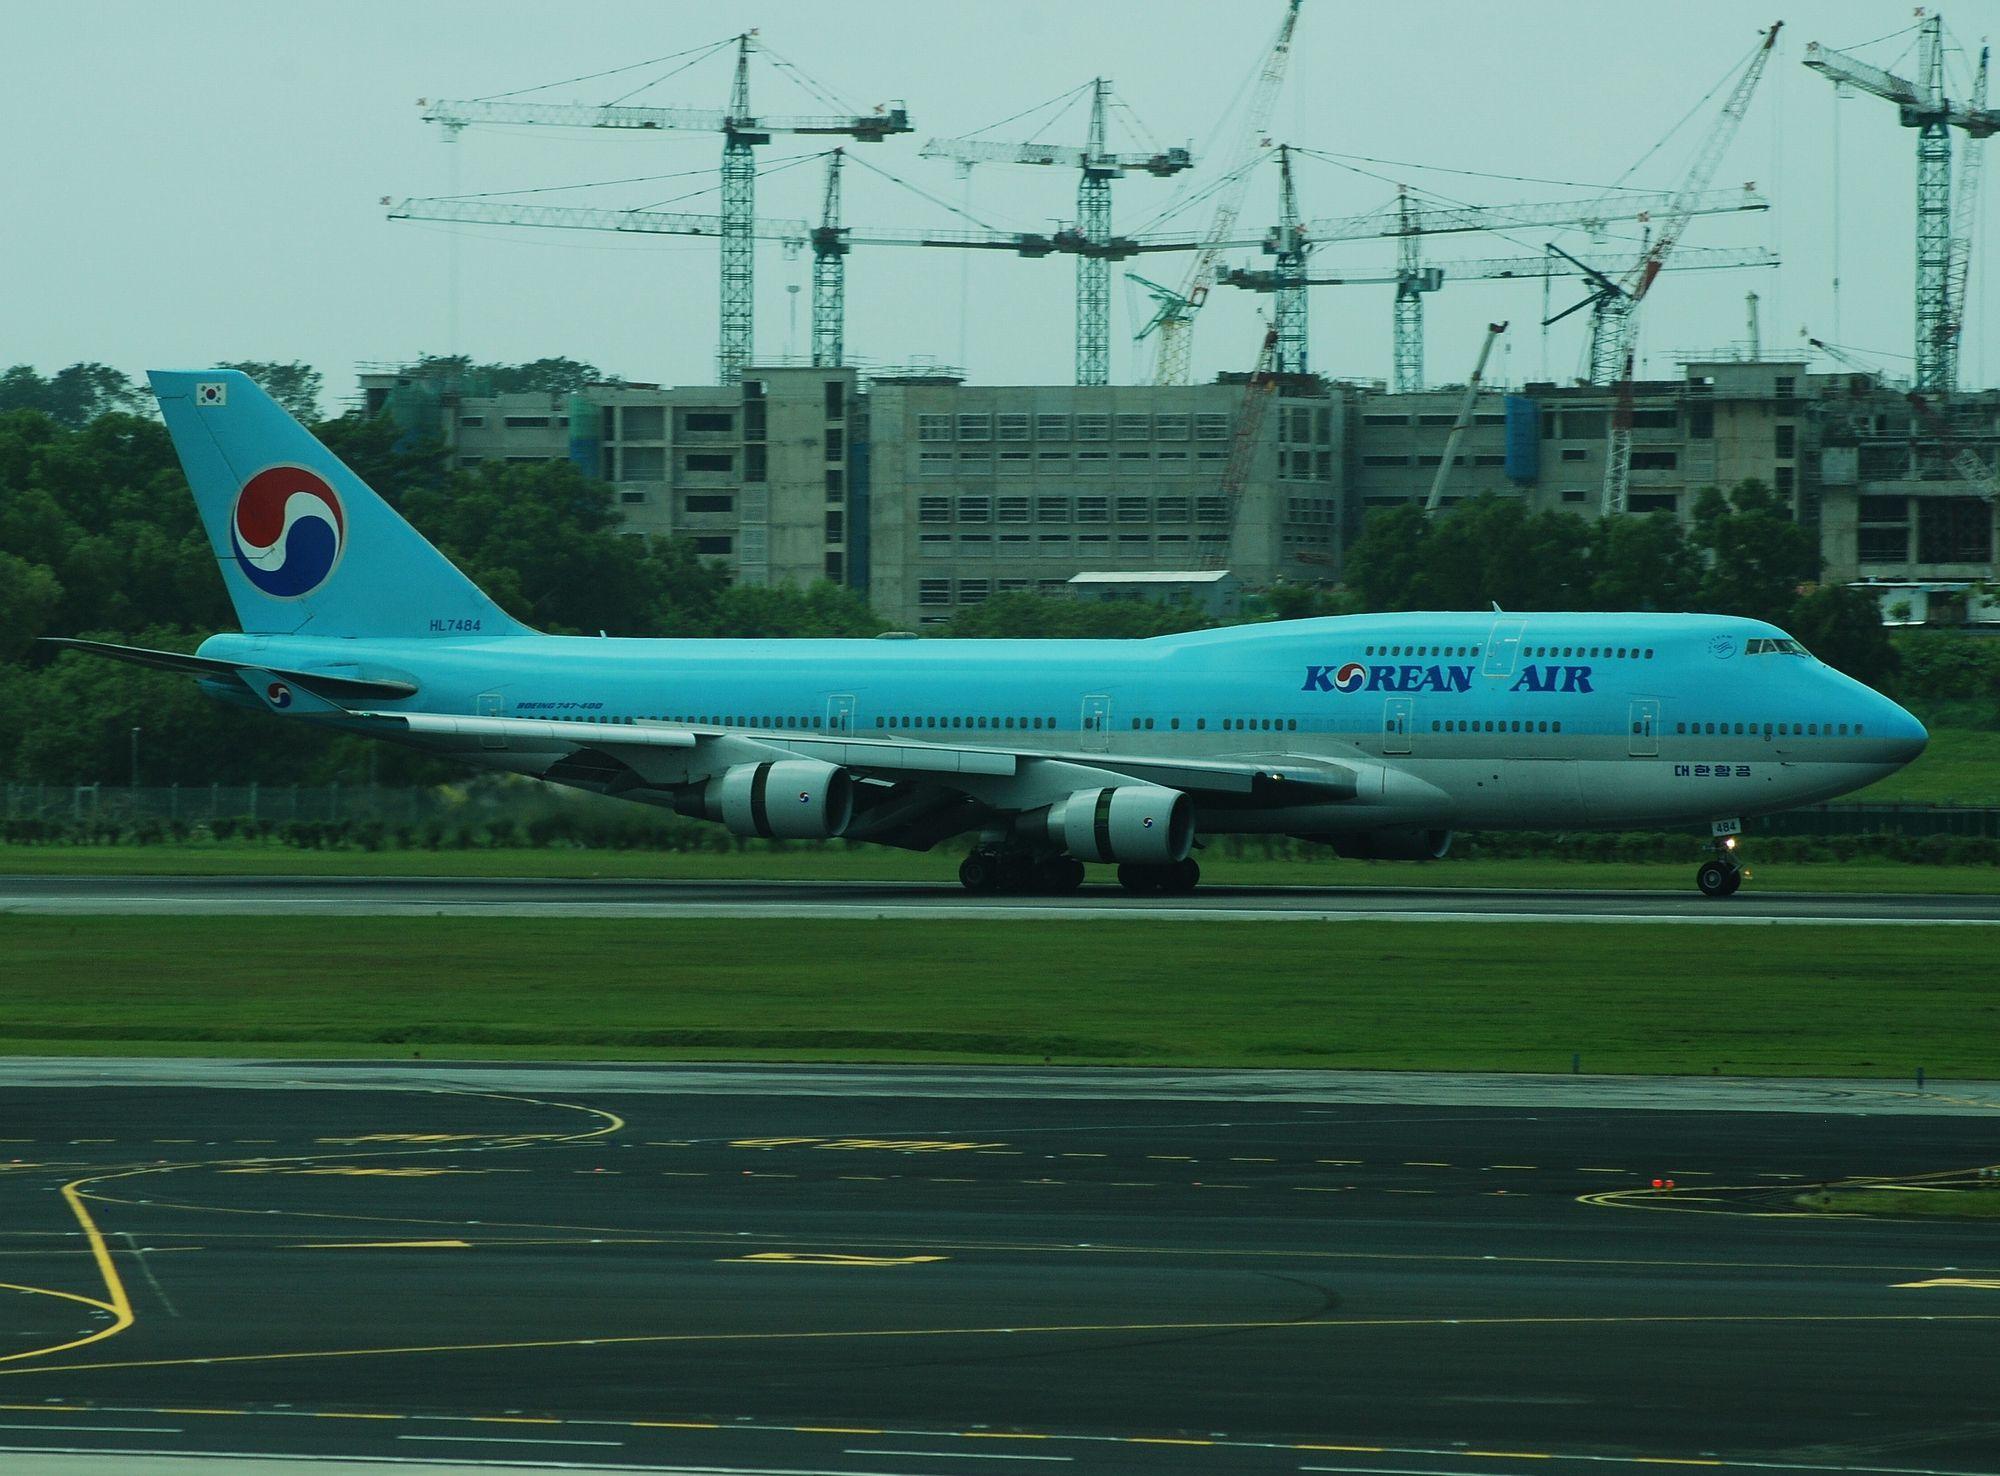 Old Korean Air Logo - File:Korean Air Boeing 747-400, HL7484, SIN 2.jpg - Wikimedia Commons